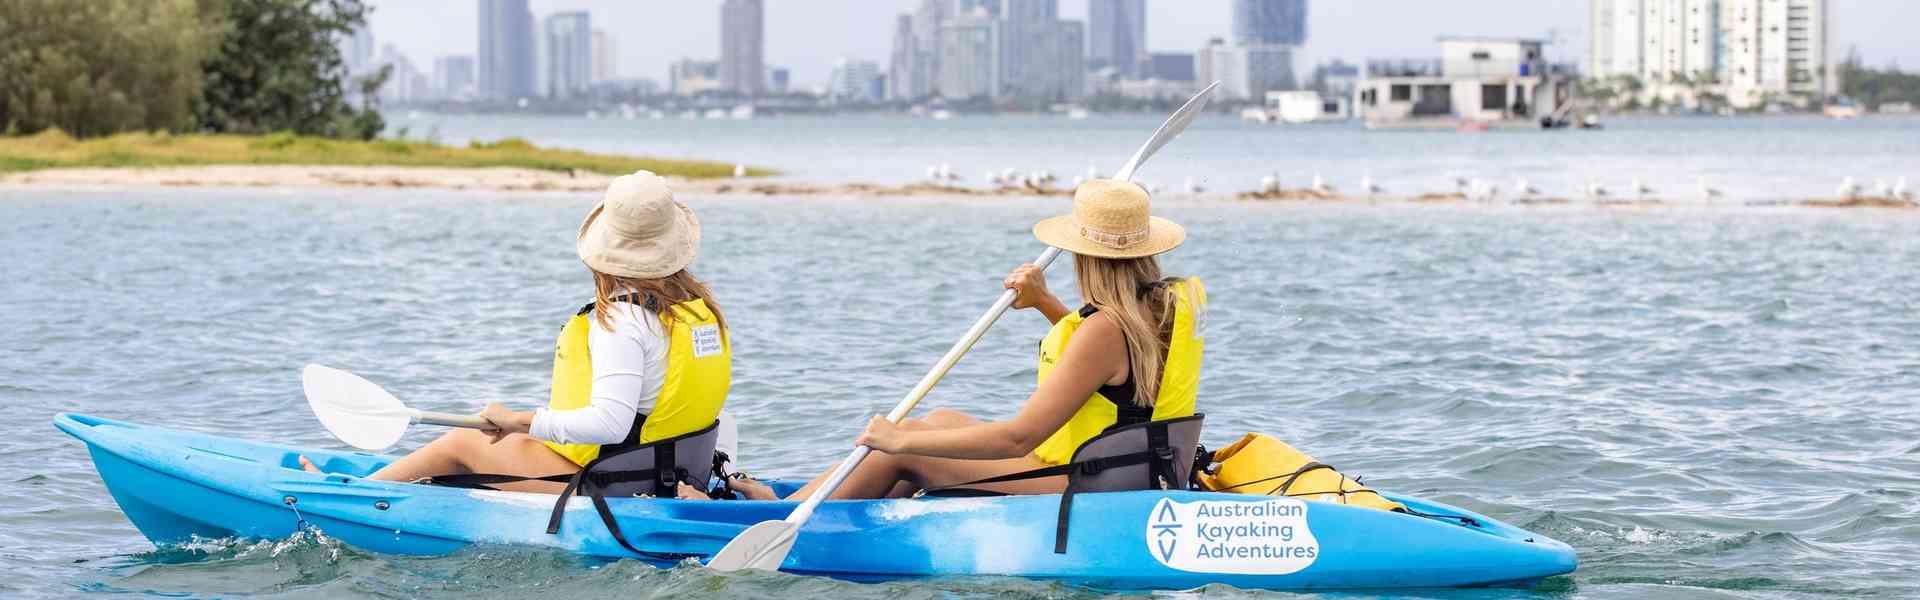 Australian Kayak Adventures